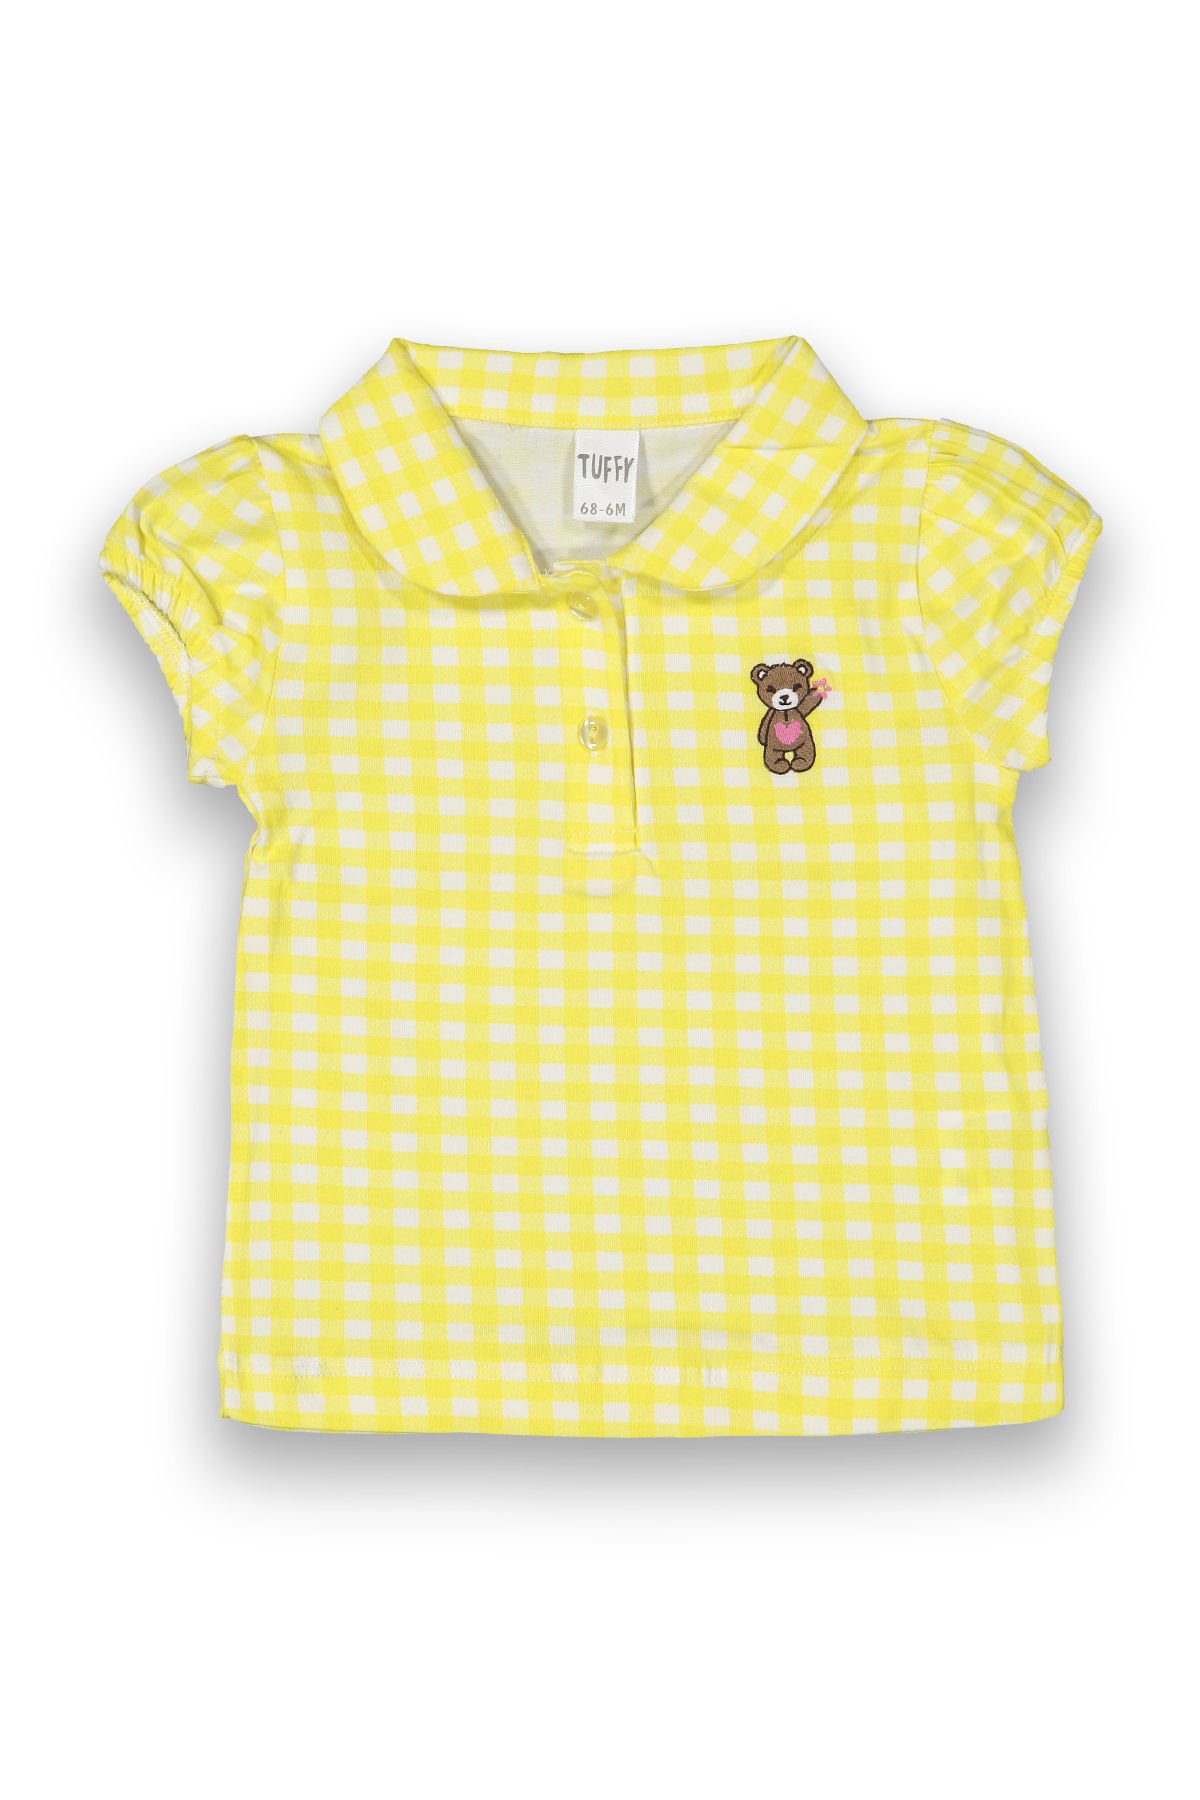 Tuffy Teddy Ayıcık Detaylı Kız Bebek T-Shirt-9002